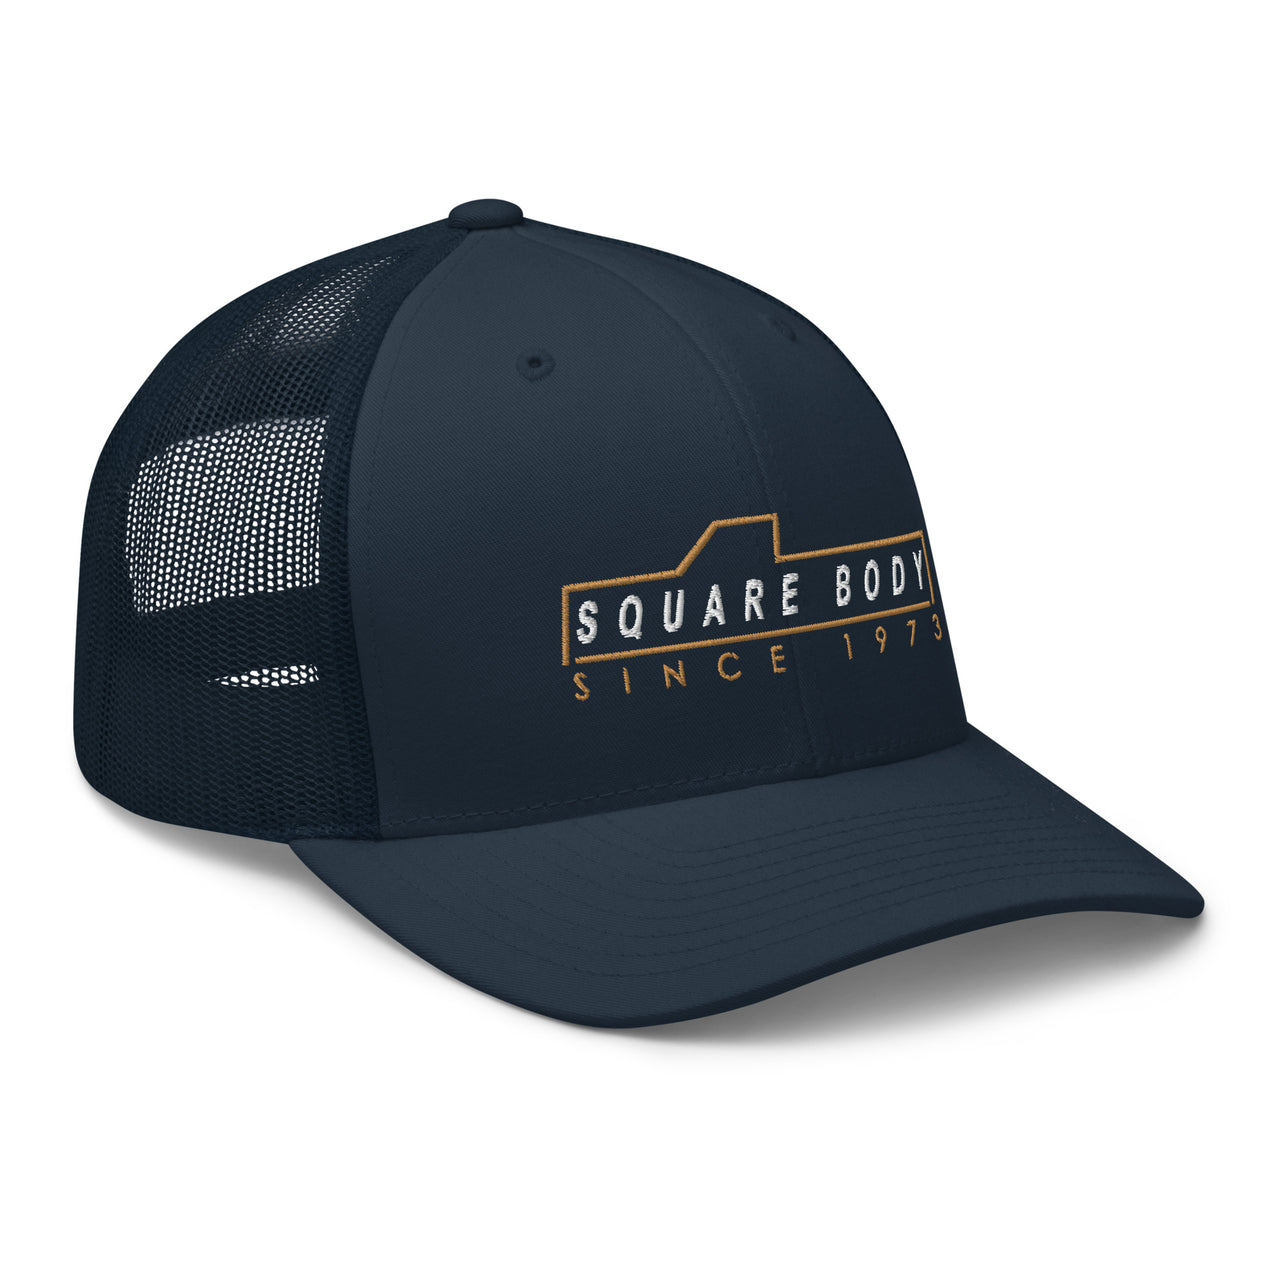 3/4 view right of square body trucker hat in navy - Aggressive Thread Auto Apparel